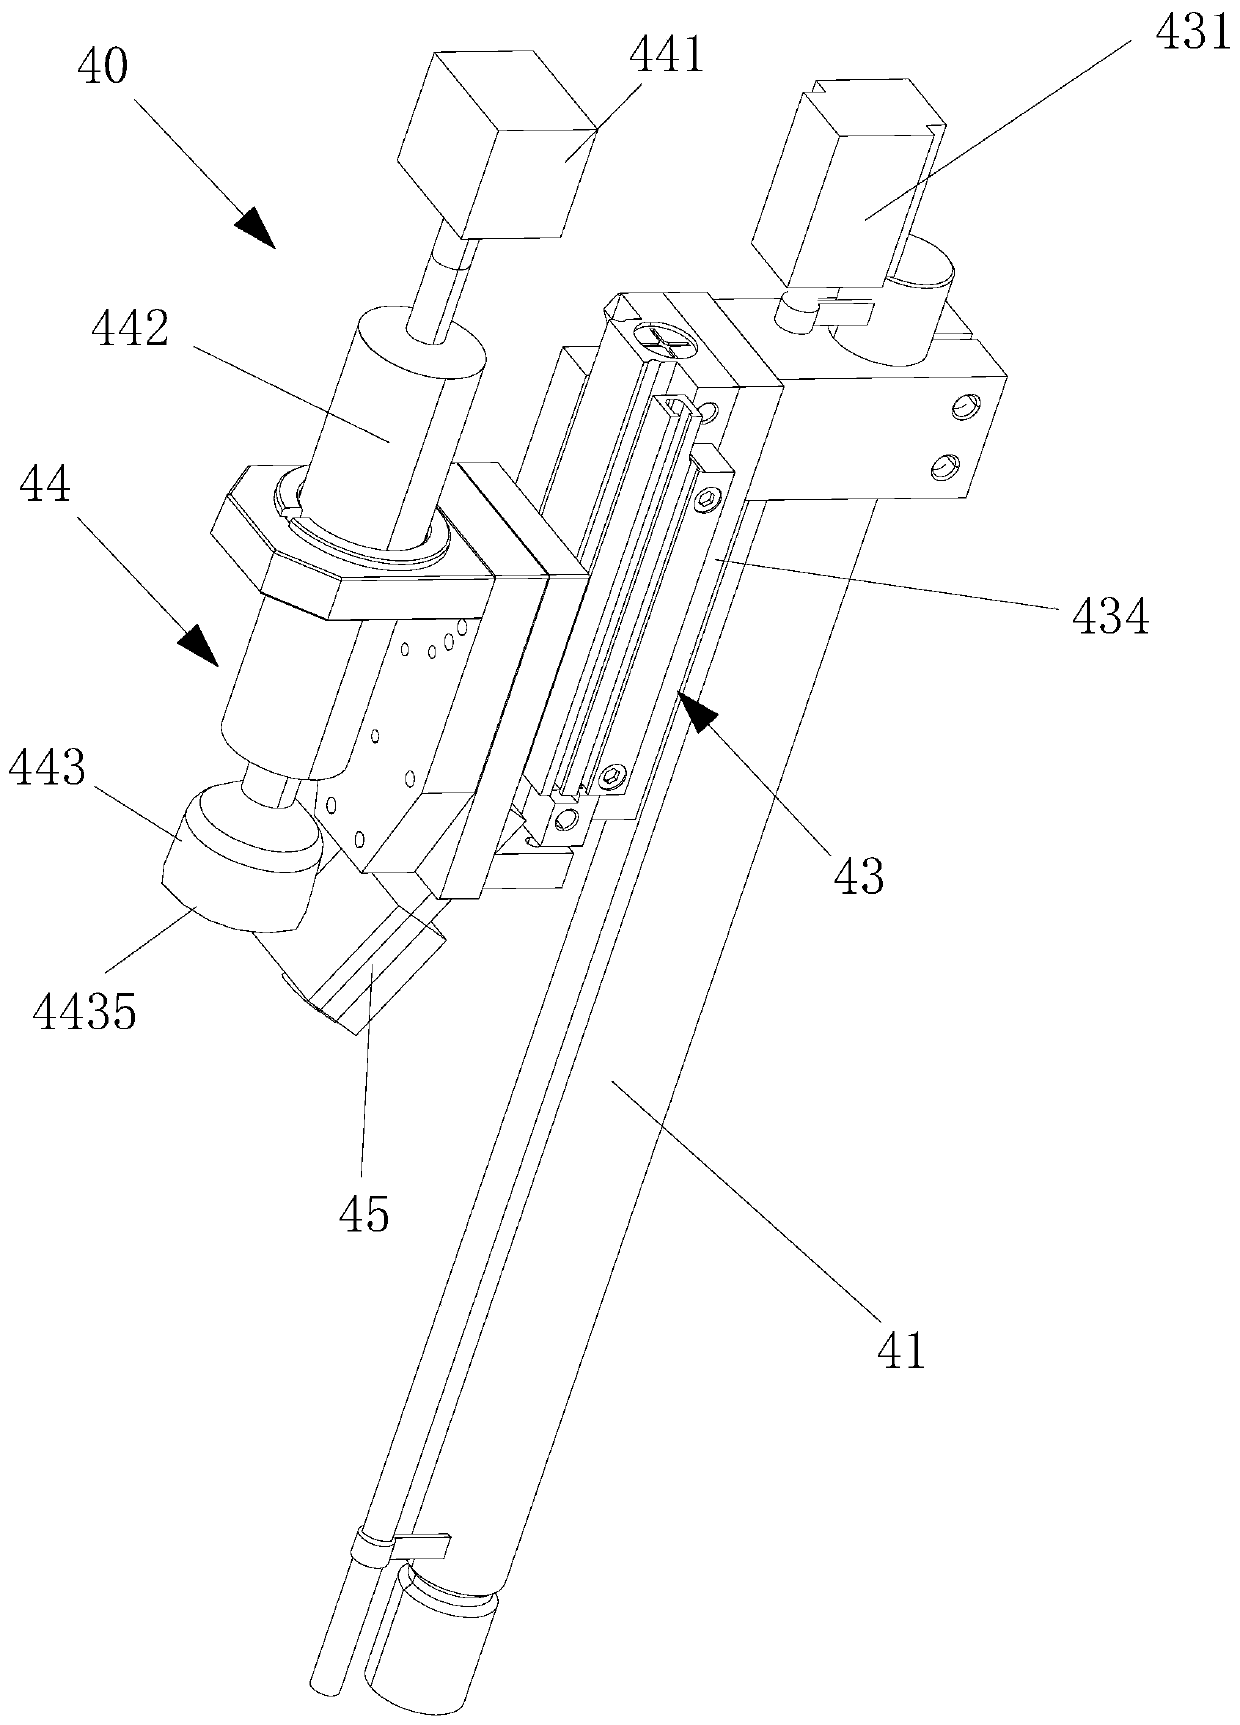 Ratchet wheel transmission type dispensing system for SMT mounting